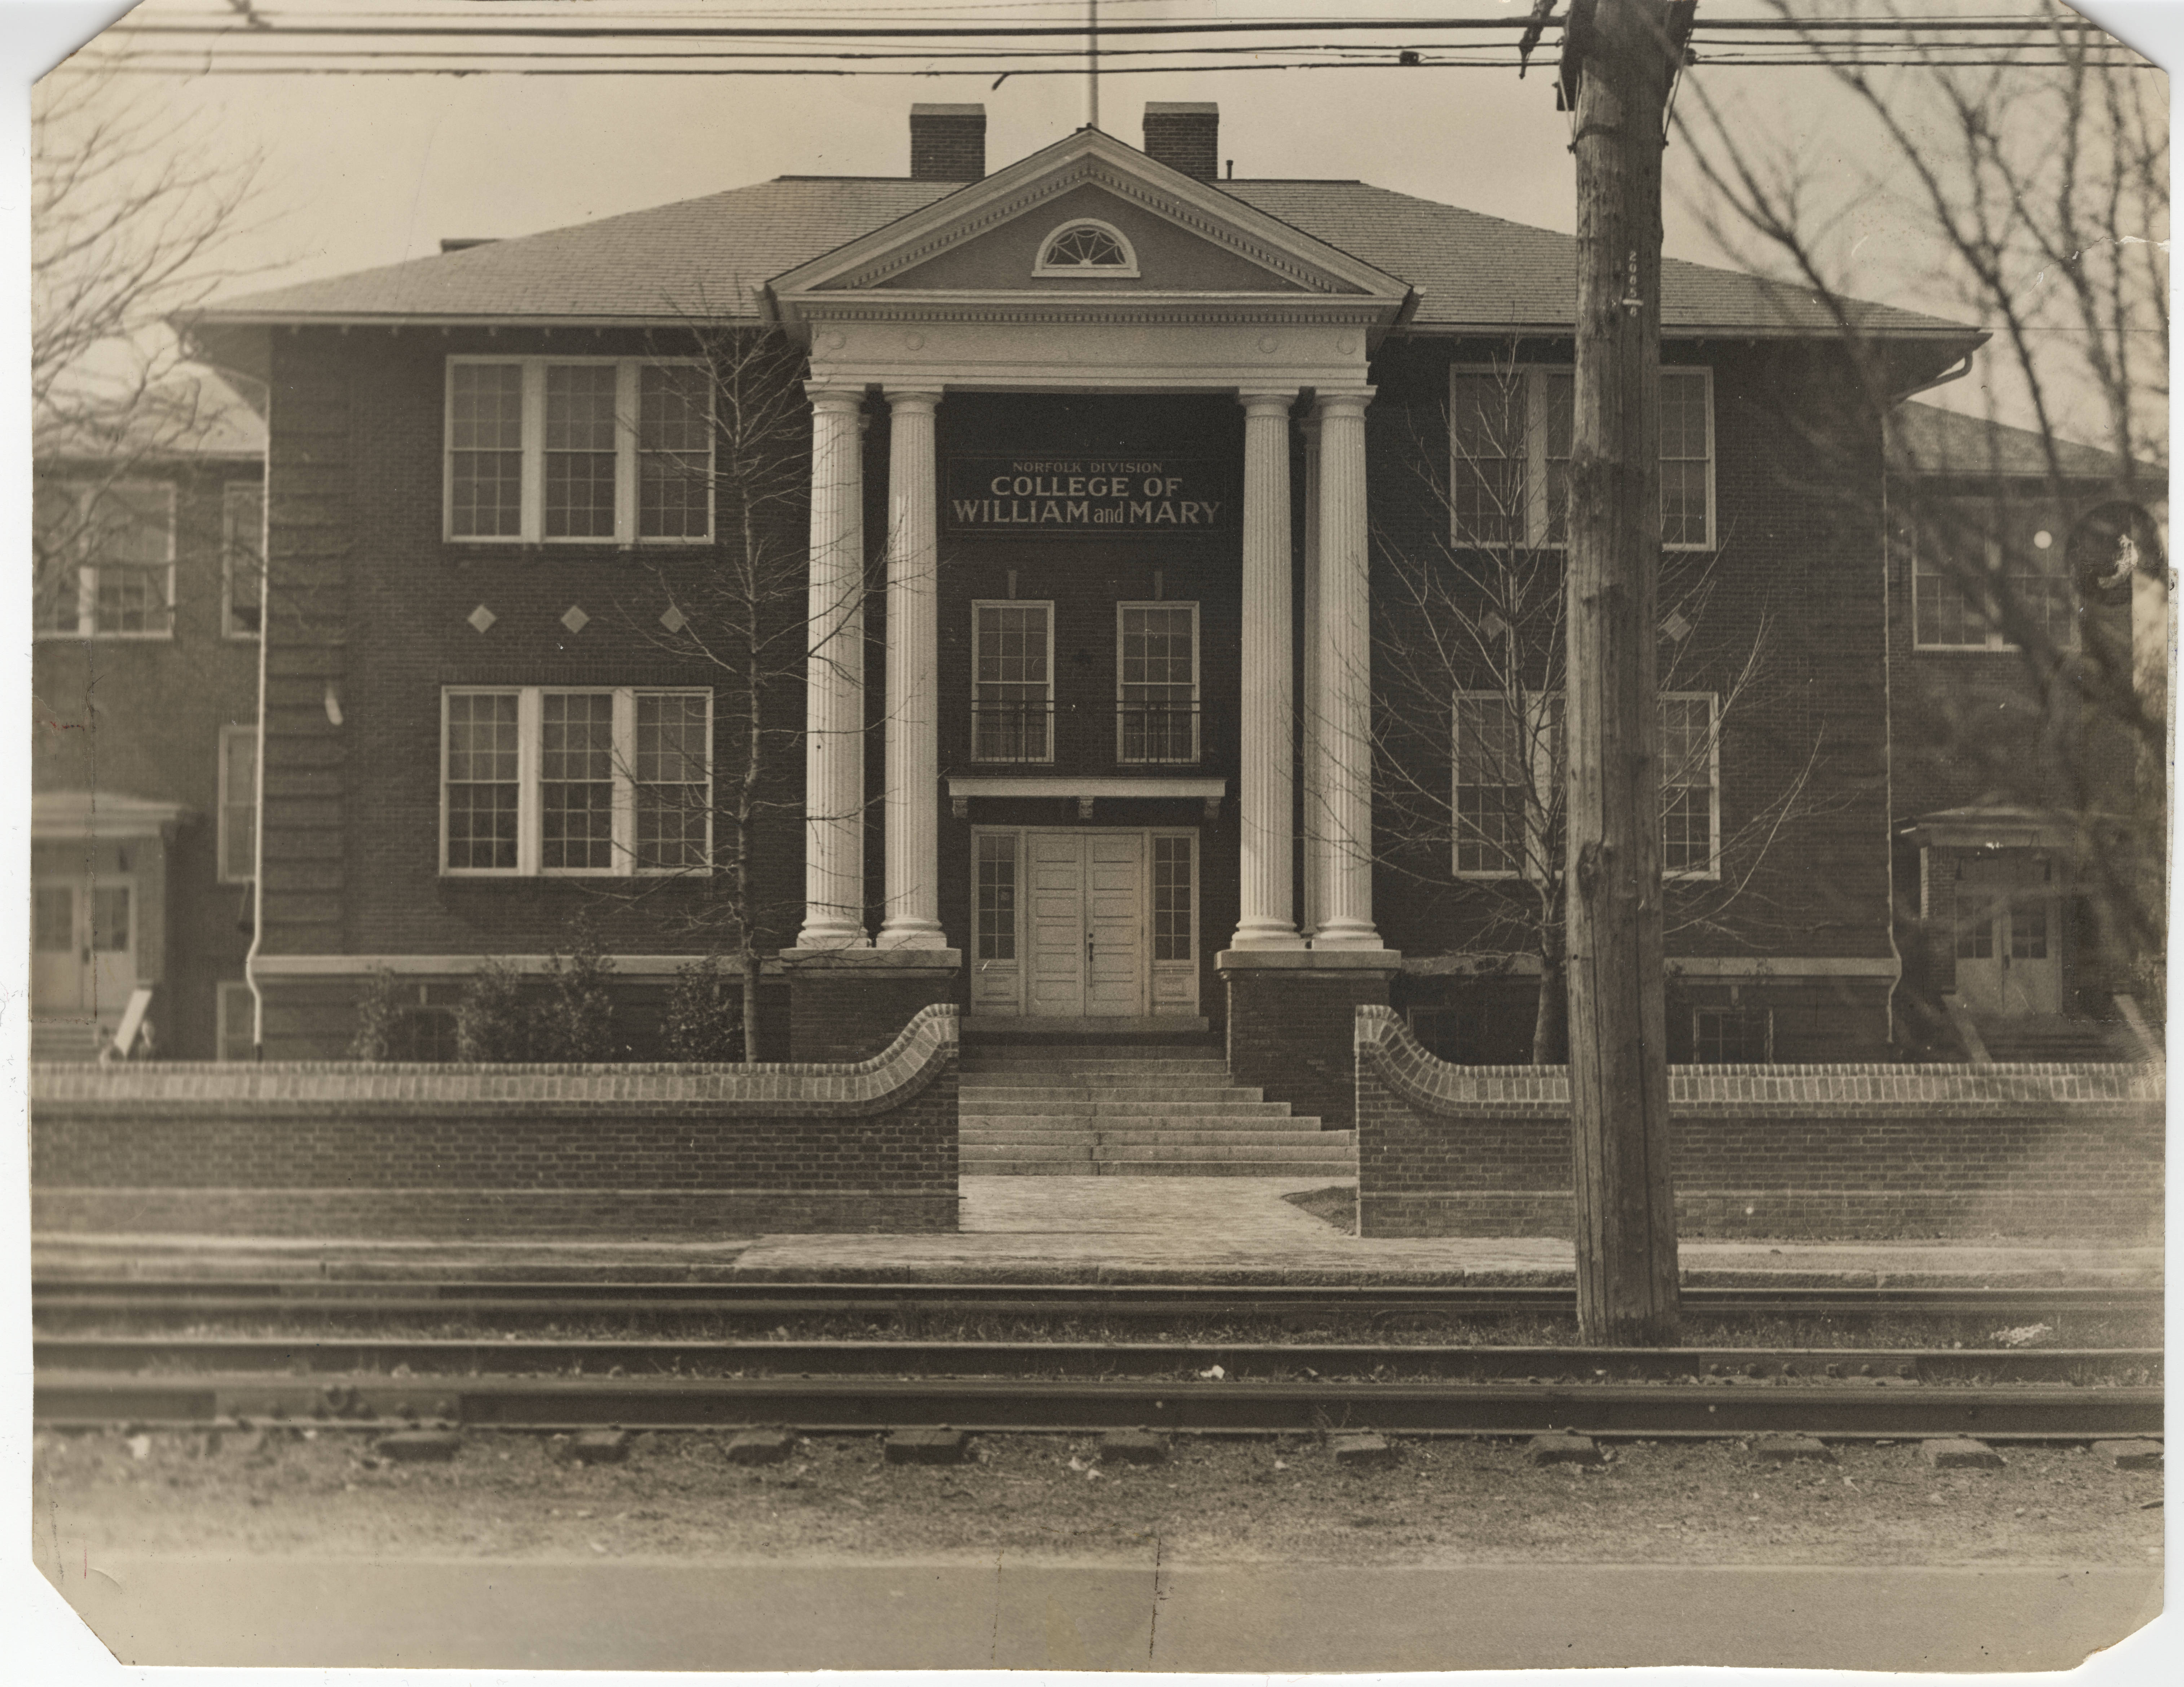 Old Larchmont School